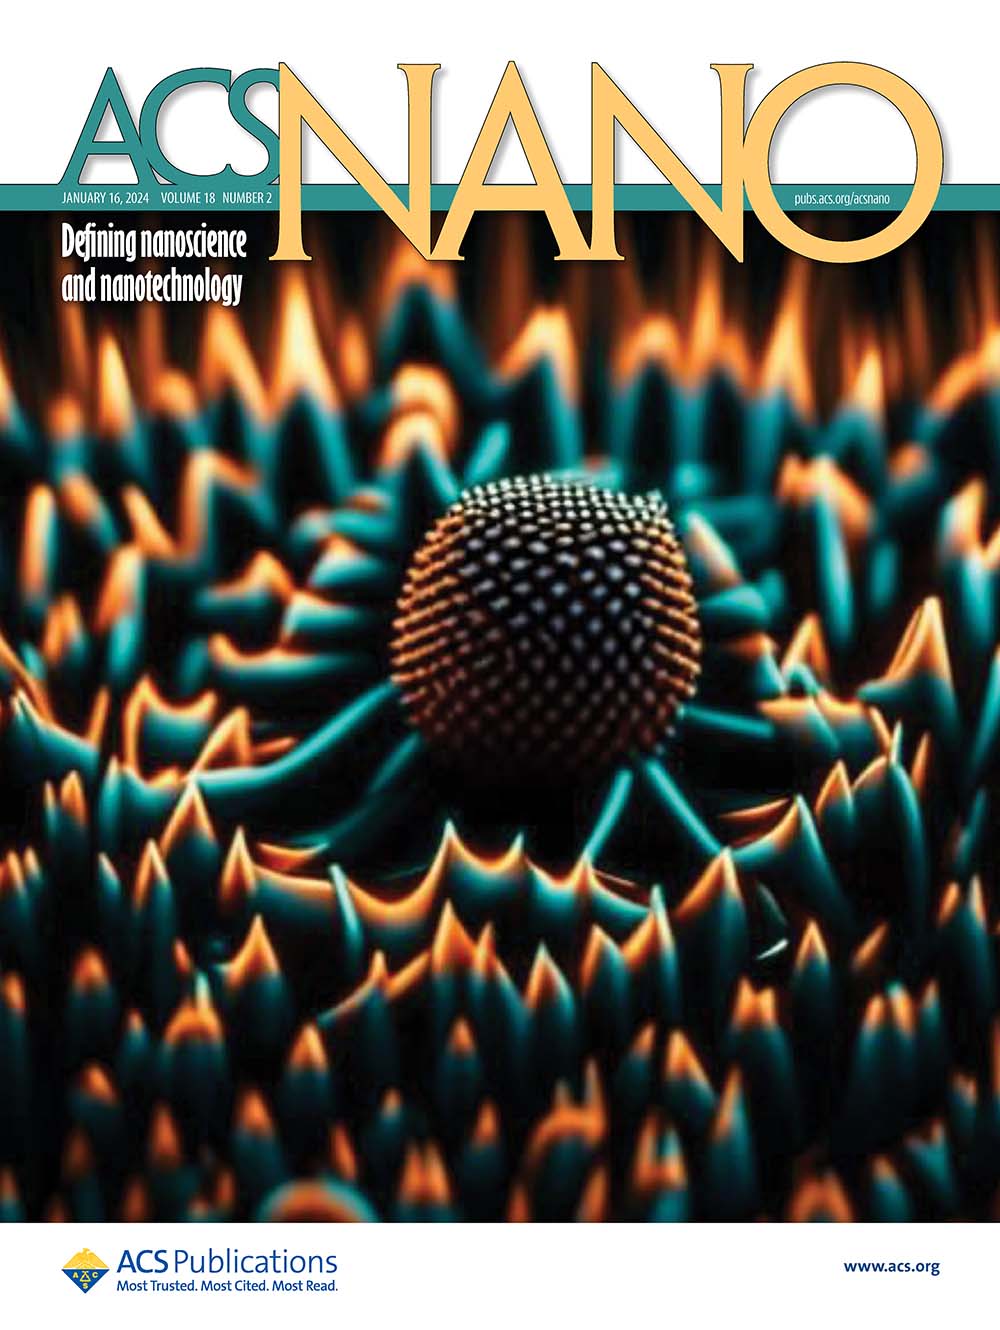 Journal cover on ACS Nano